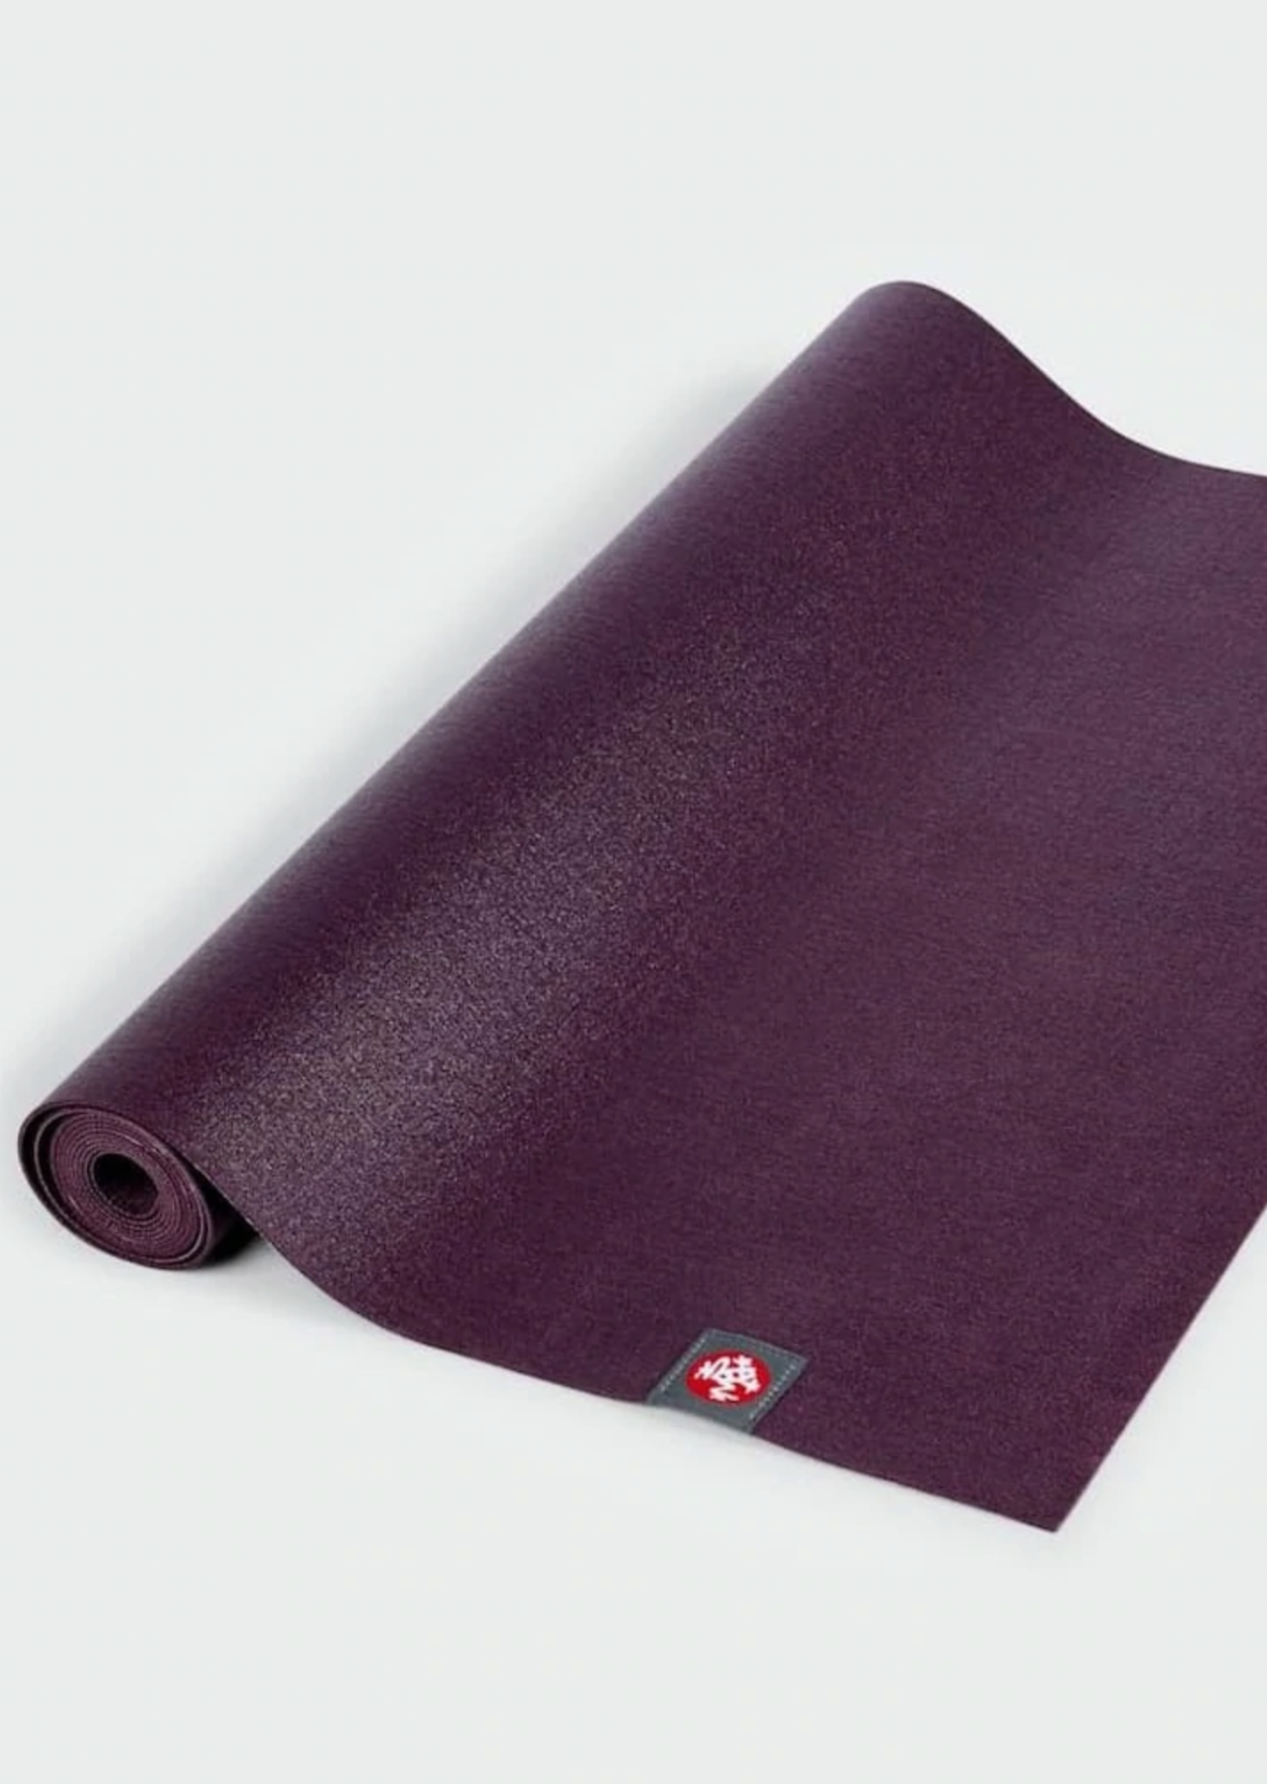 super thin travel yoga mat in purple